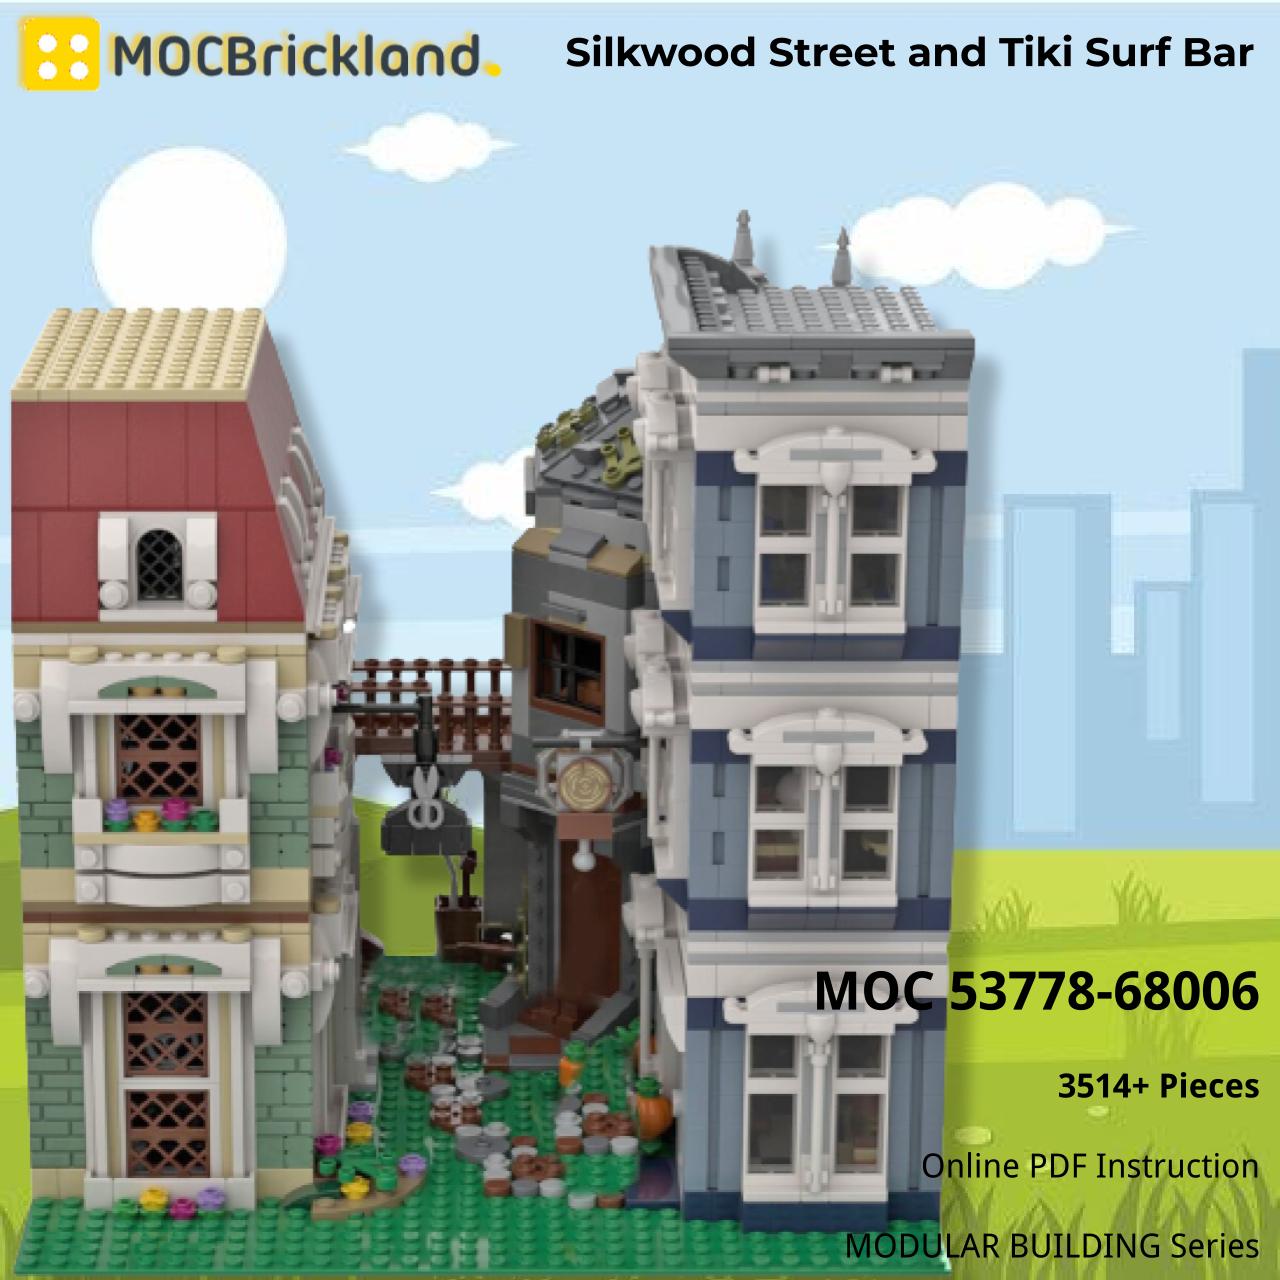 Silkwood Street and Tiki Surf Bar MODULAR BUILDING MOC 53778-68006 WITH 3514 PIECES